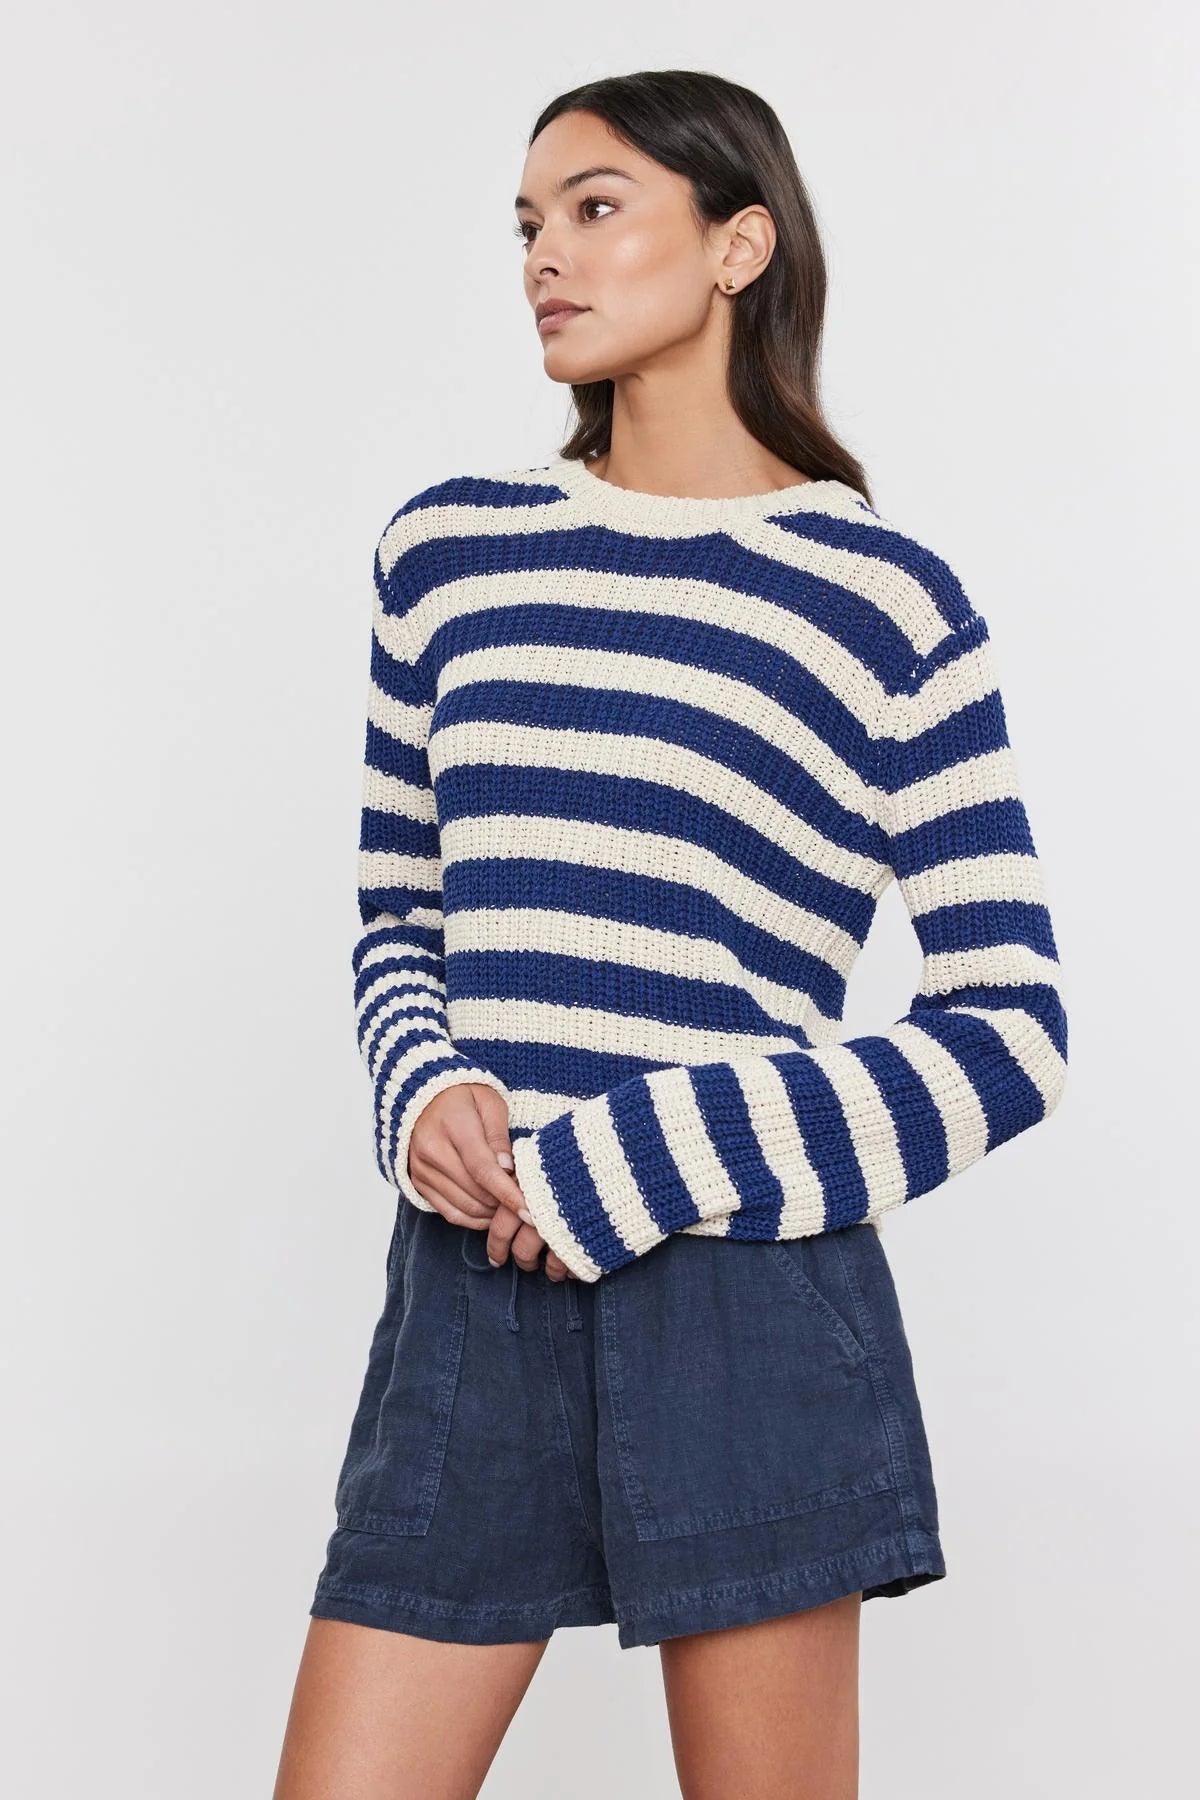 Velvet Maxine Cotton Knit Sweater